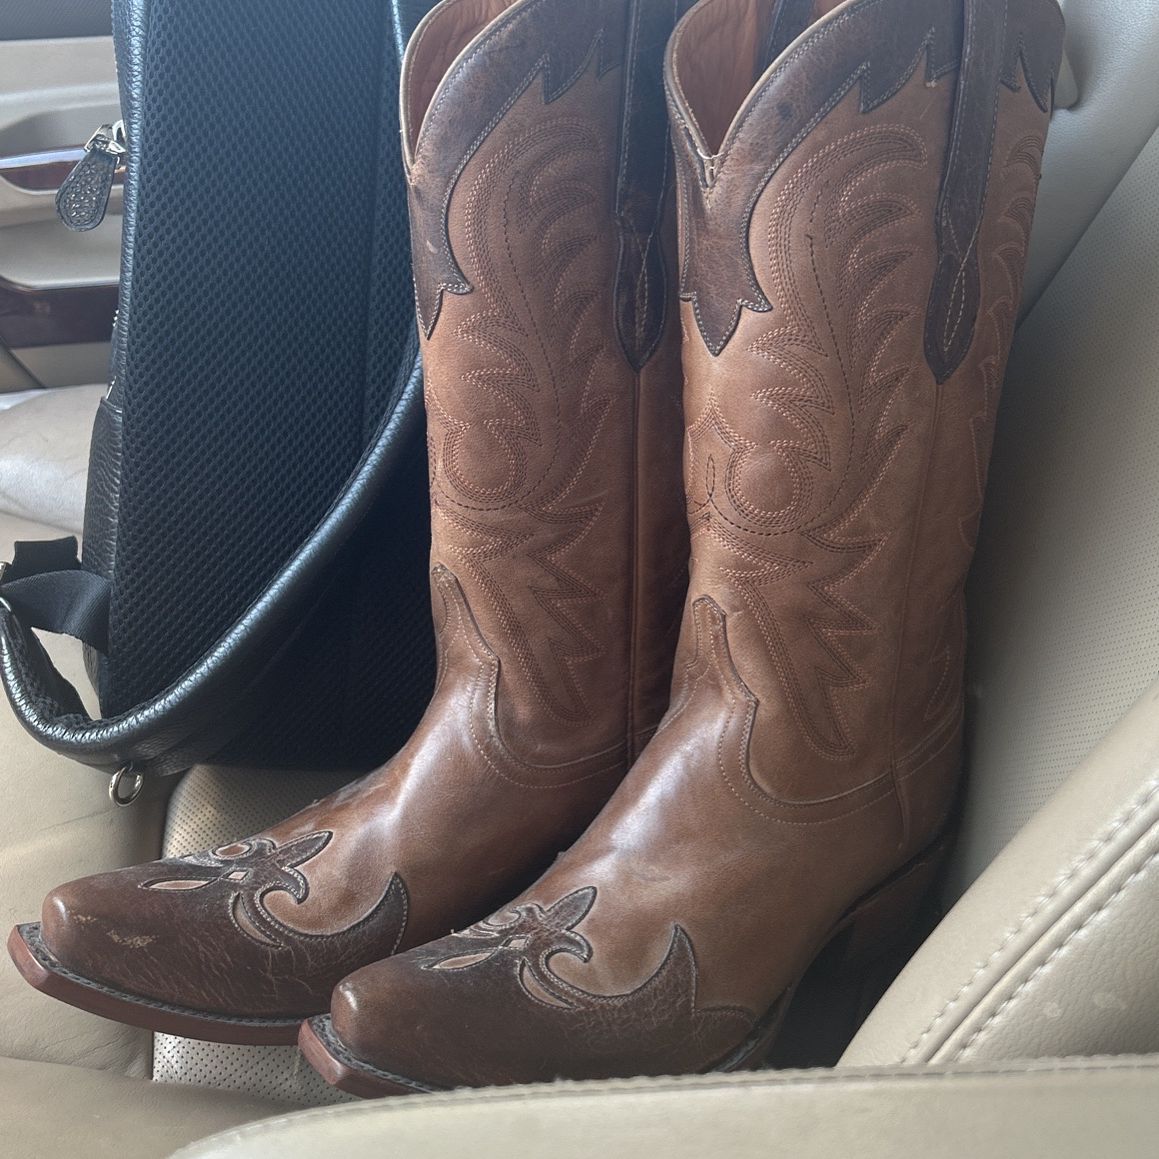 NEW OPEN BOX Lucchese Women’s Cowboy Boots 